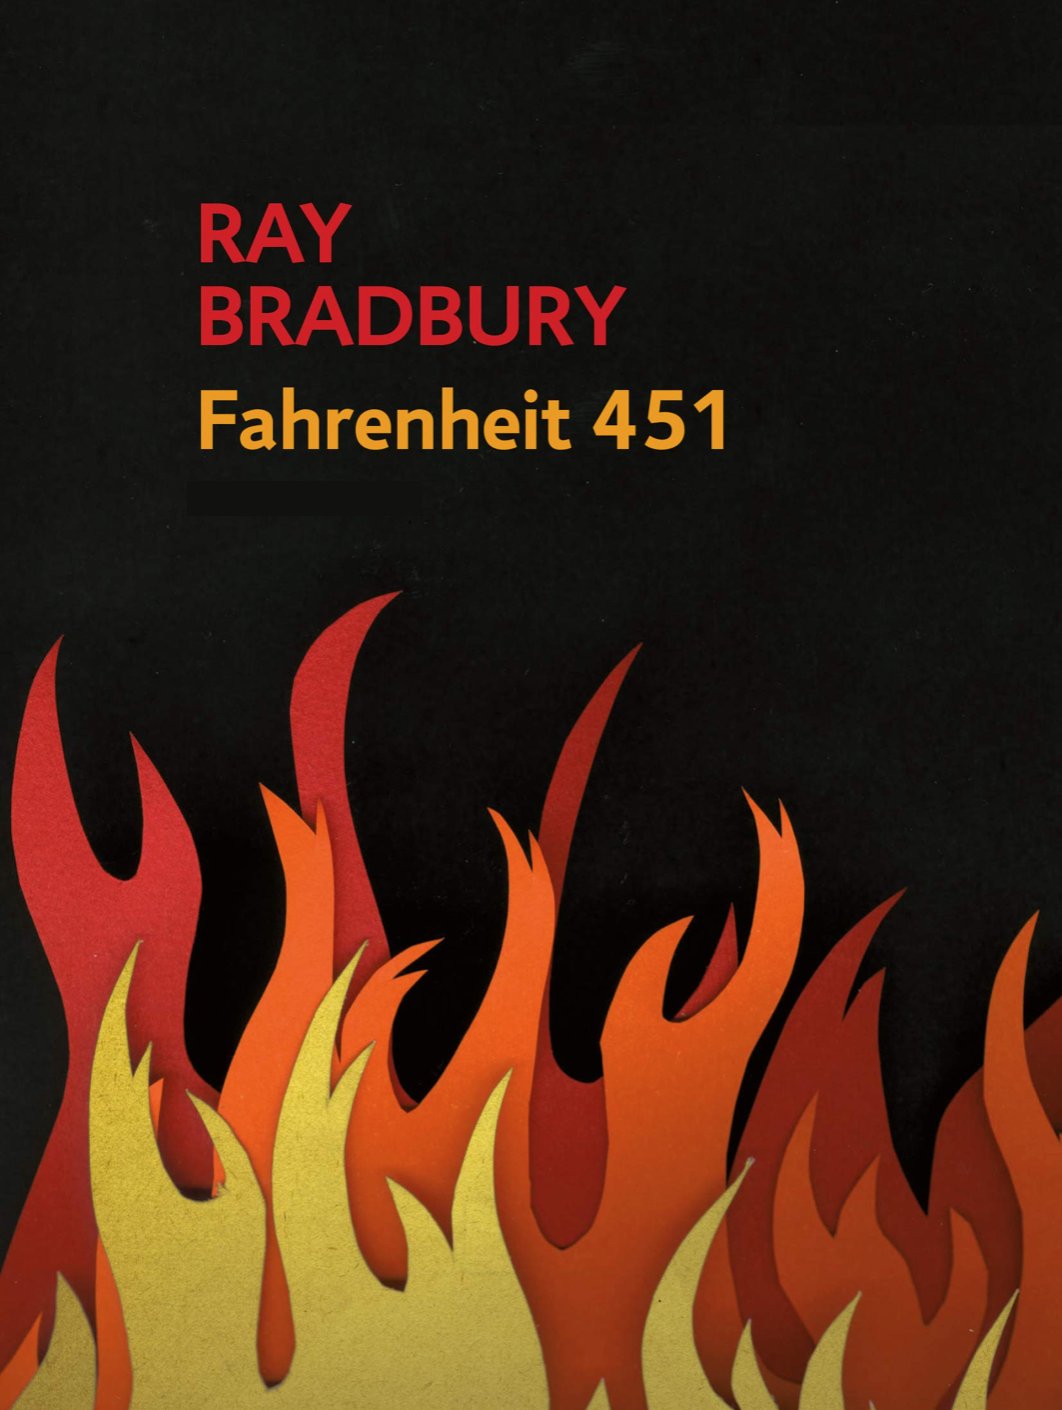 Слушать брэдбери 451 градус по фаренгейту. Ray Bradbury "Fahrenheit 451". 451 Degrees Fahrenheit ray Bradbury.